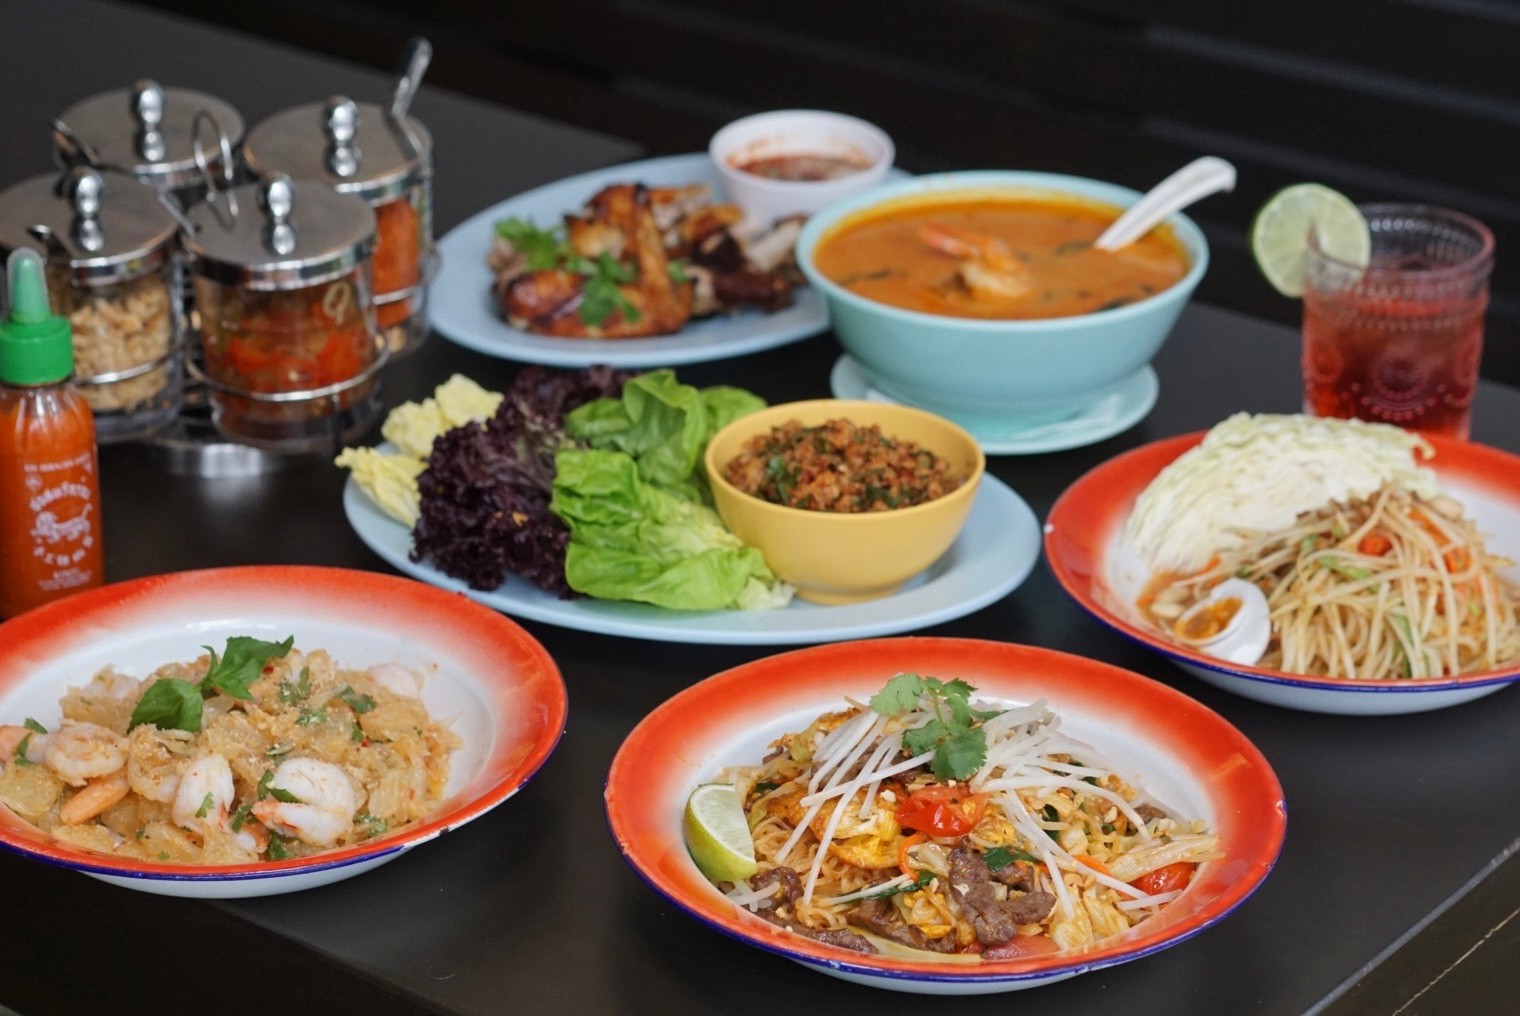 KIN Urban Thai Kitchen: A Taste of Northern Thailand in Jing'an